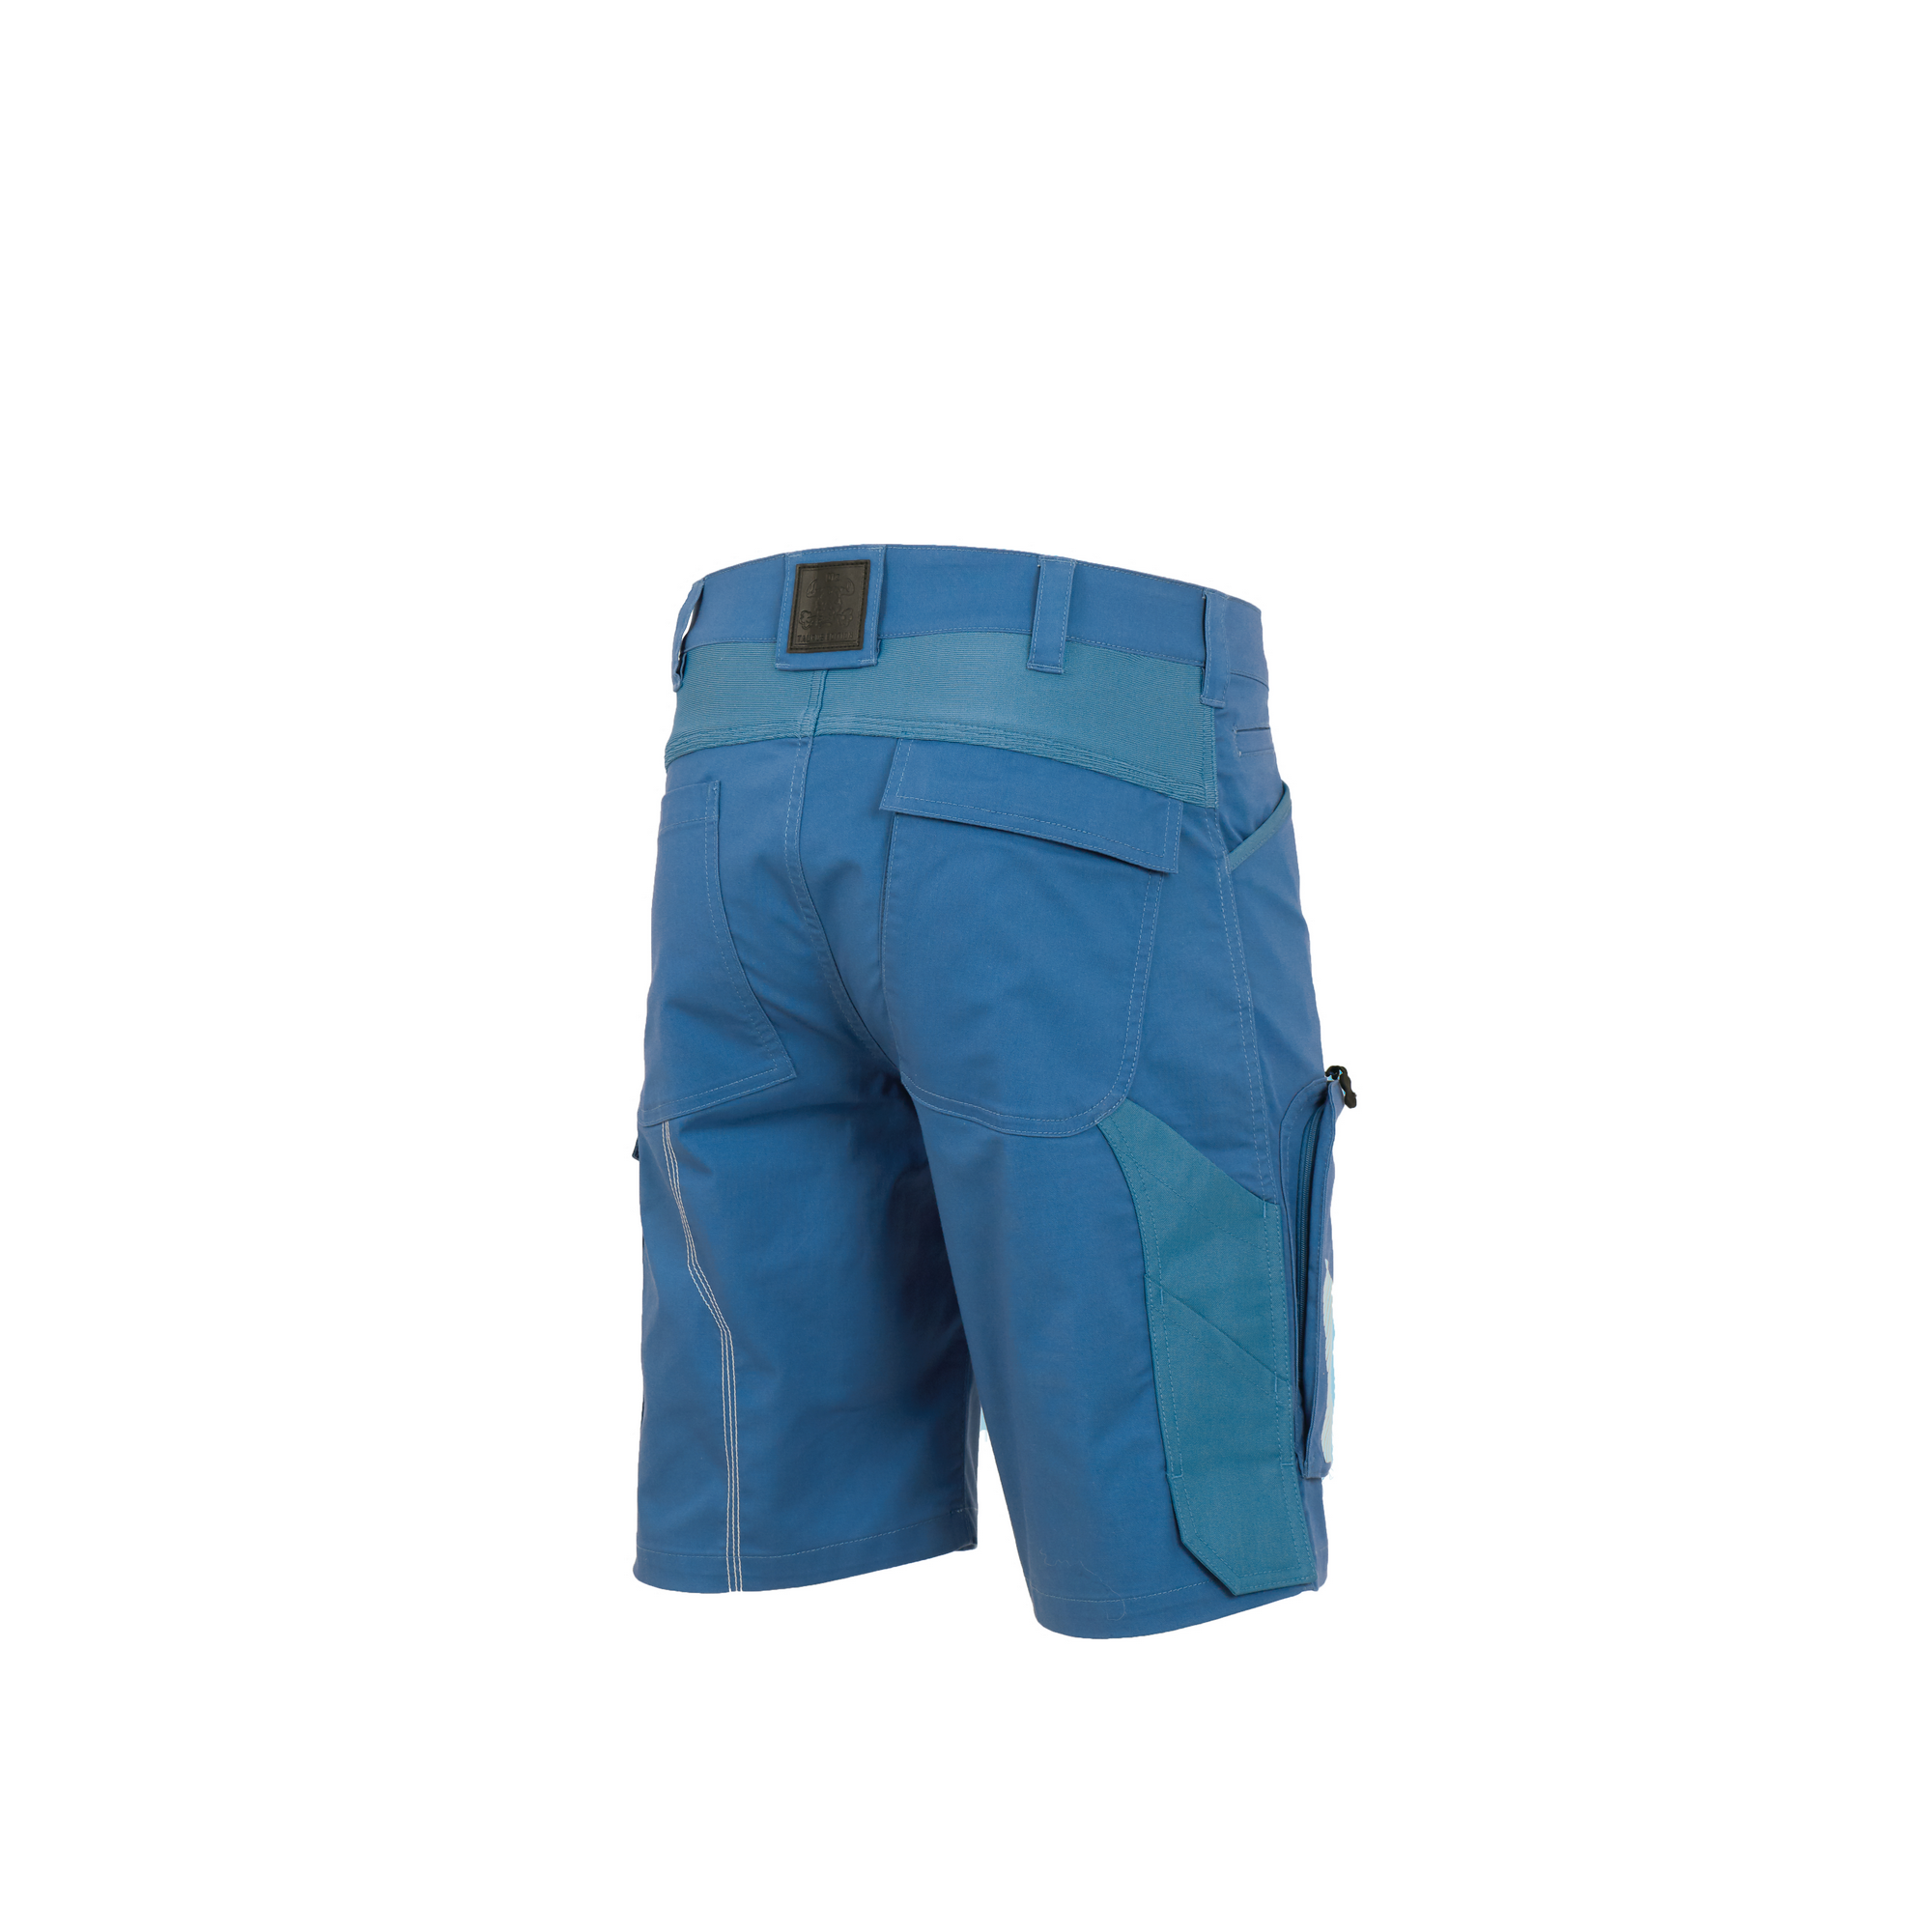 Shorts 'Taurus' blau 52 + product picture